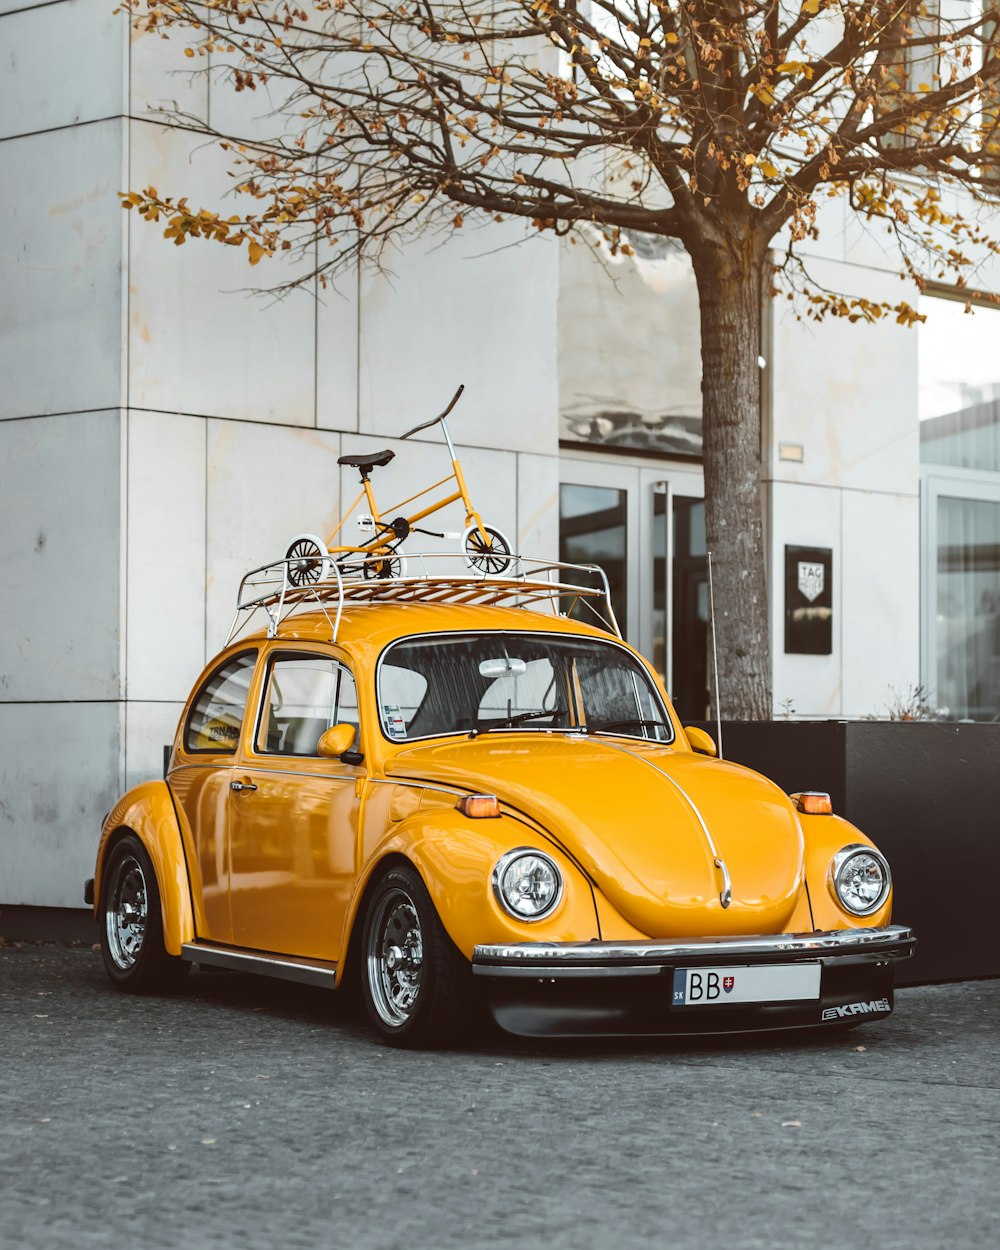 Volkswagen Beetle Pictures | Download Free Images on Unsplash